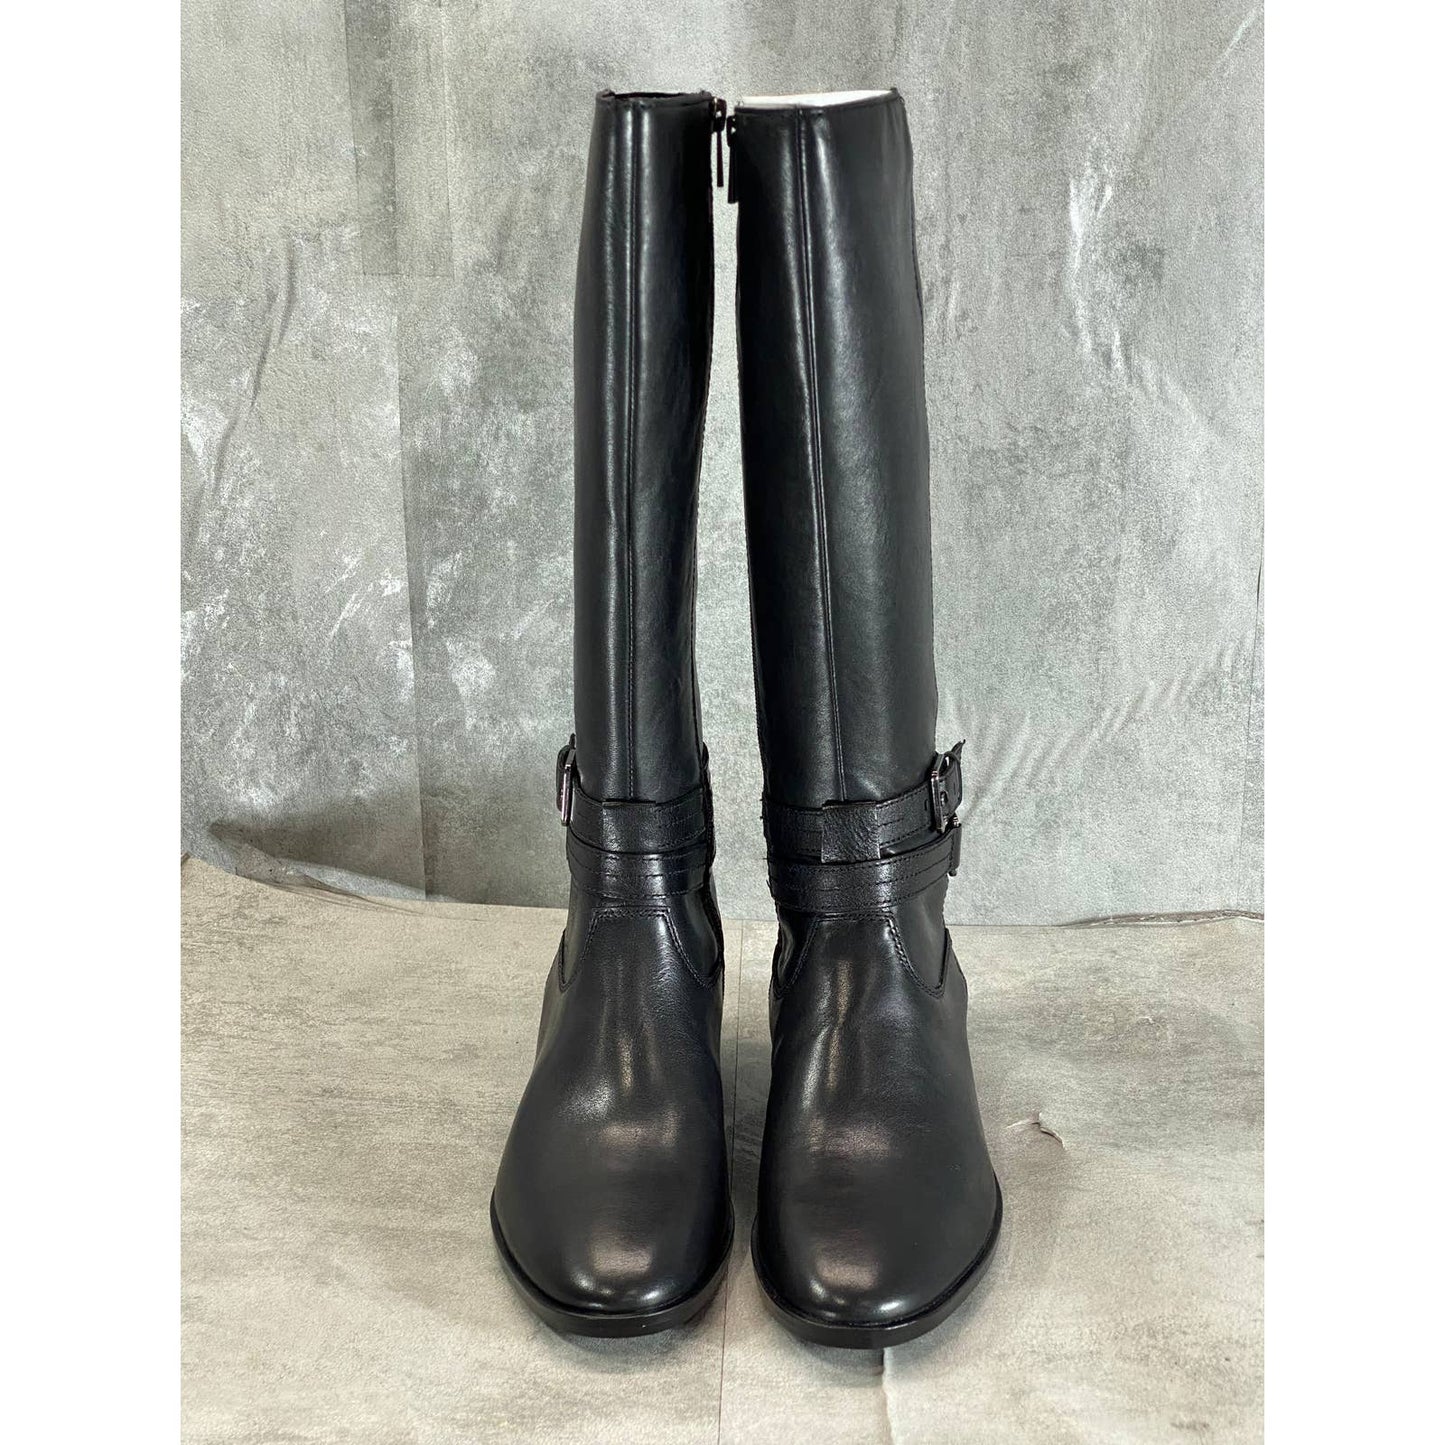 NATURALIZER Women's Wide Black Leather Reid Tall Riding Boots SZ 7W